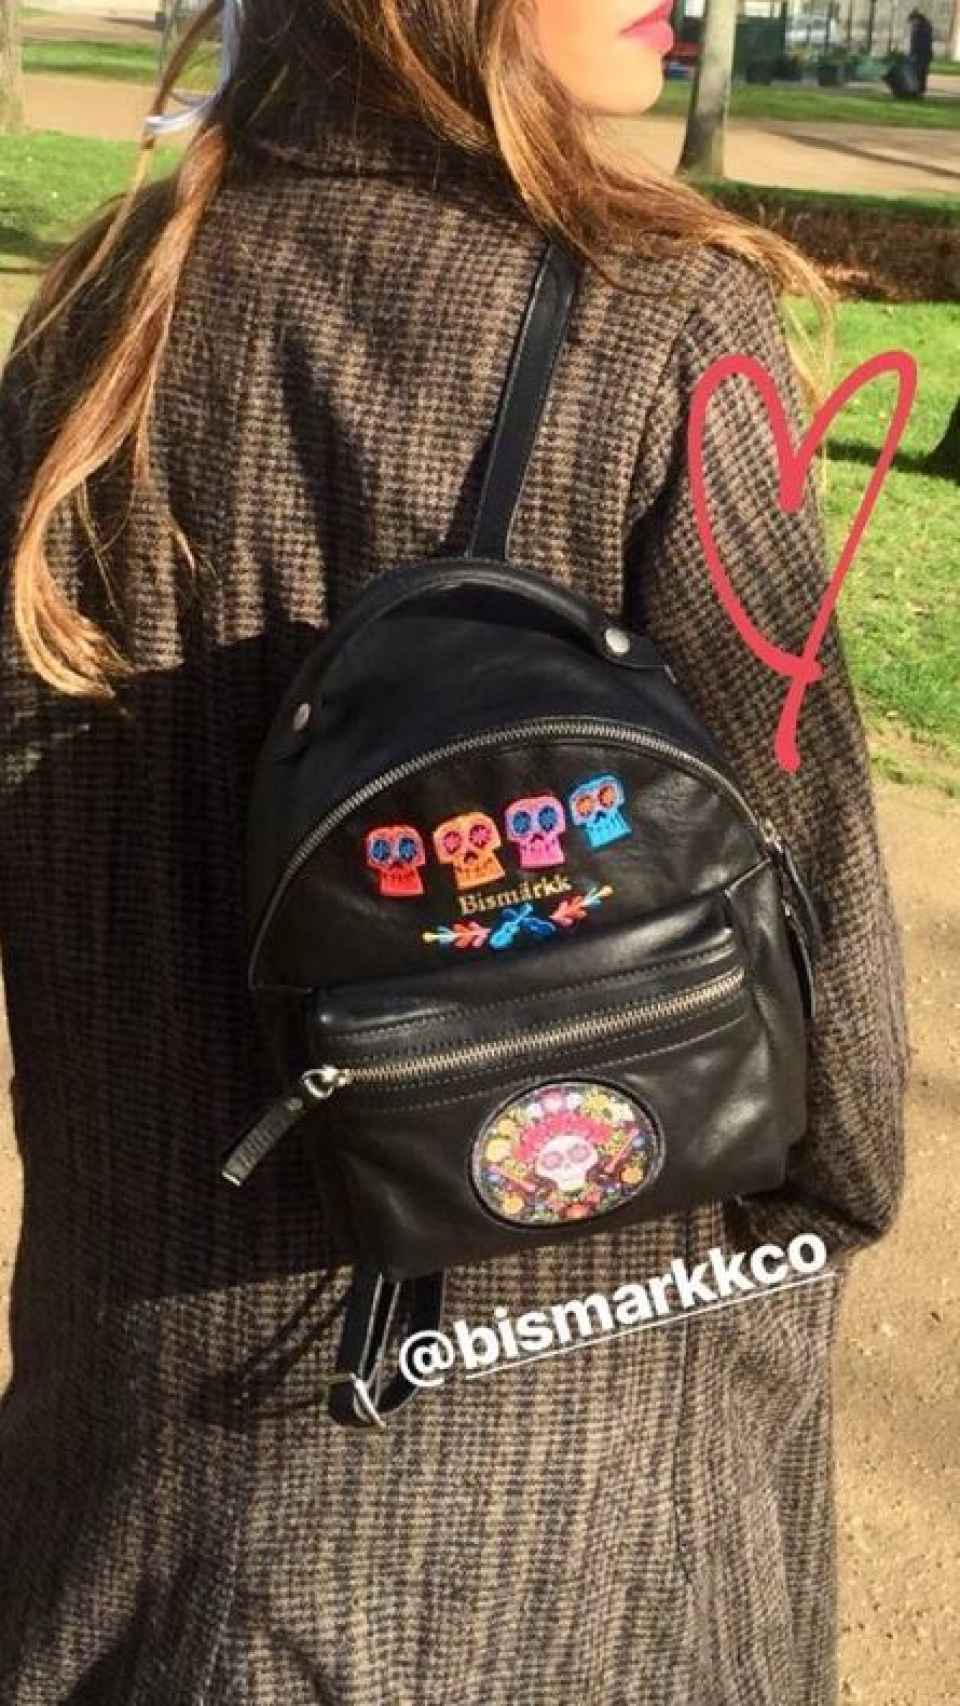 La mochila de Bismarkk.